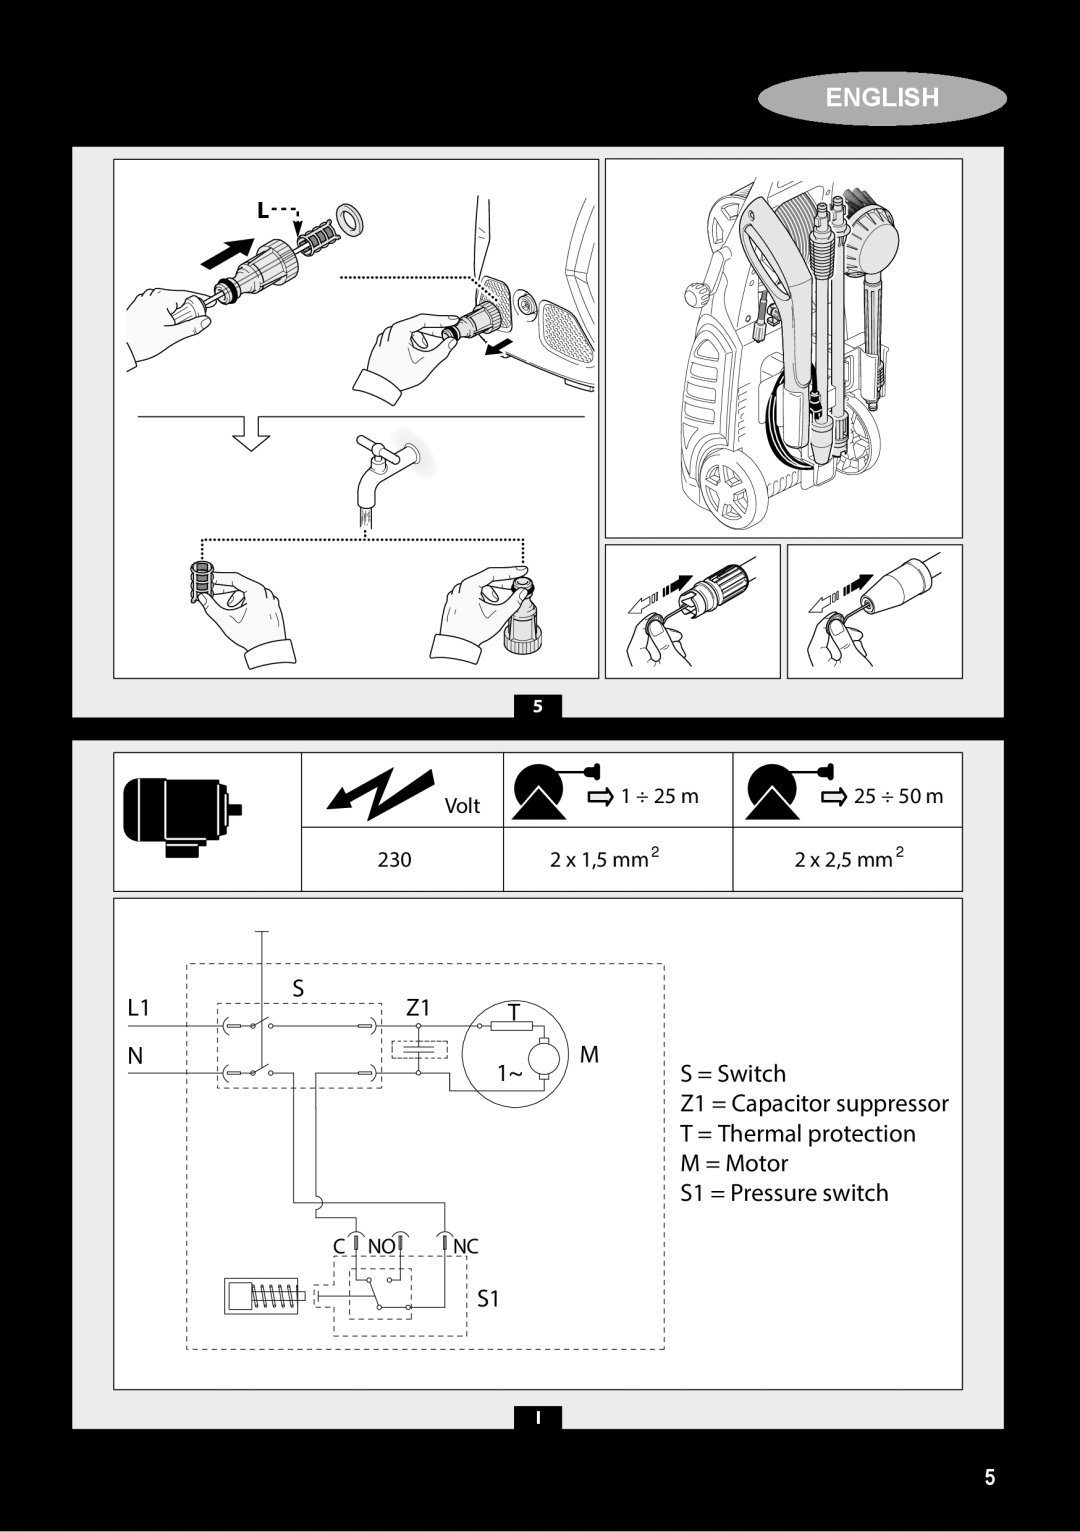 Black & Decker PW1700SPM manual English, Z1 = Capacitor suppressor 